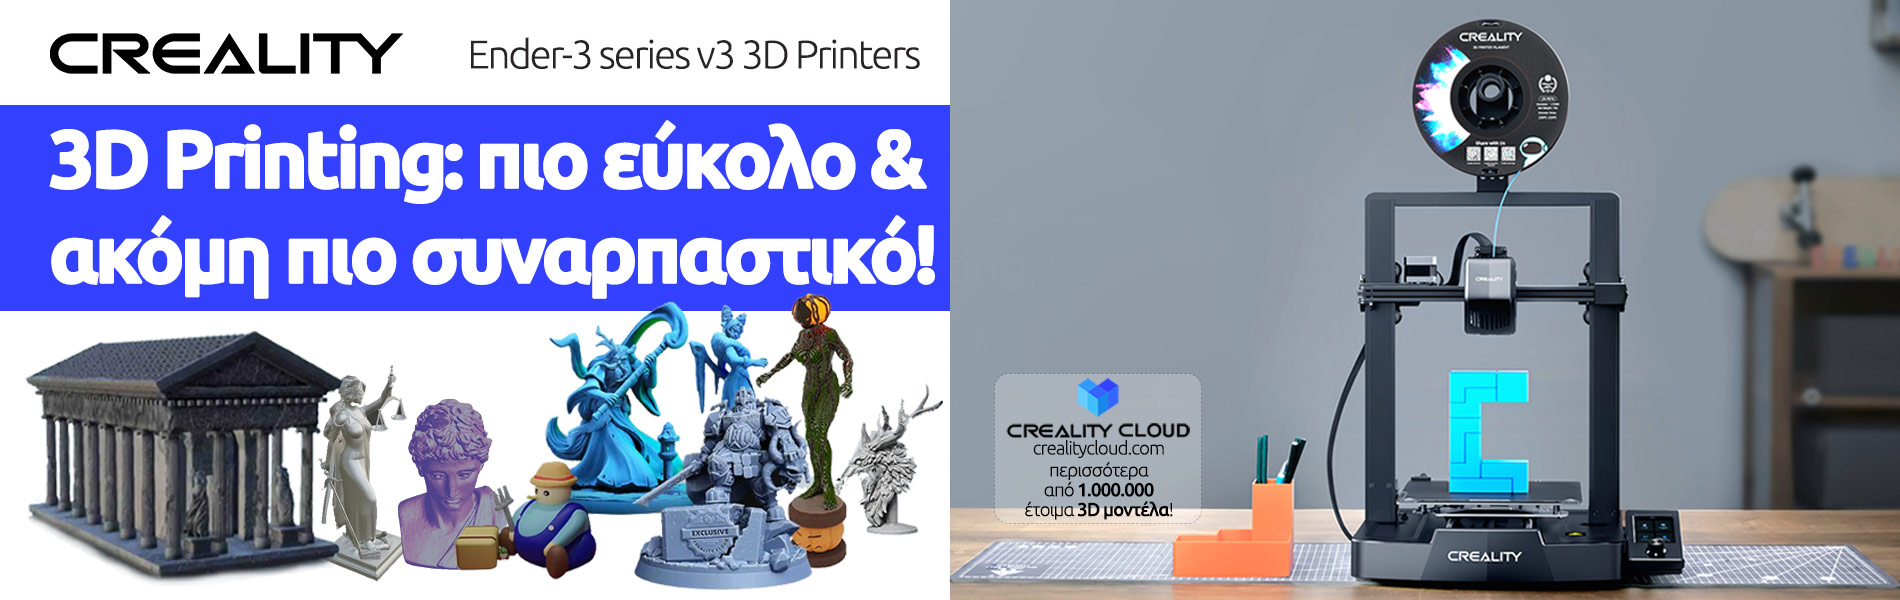 Ender-3 series v3 3D Printers